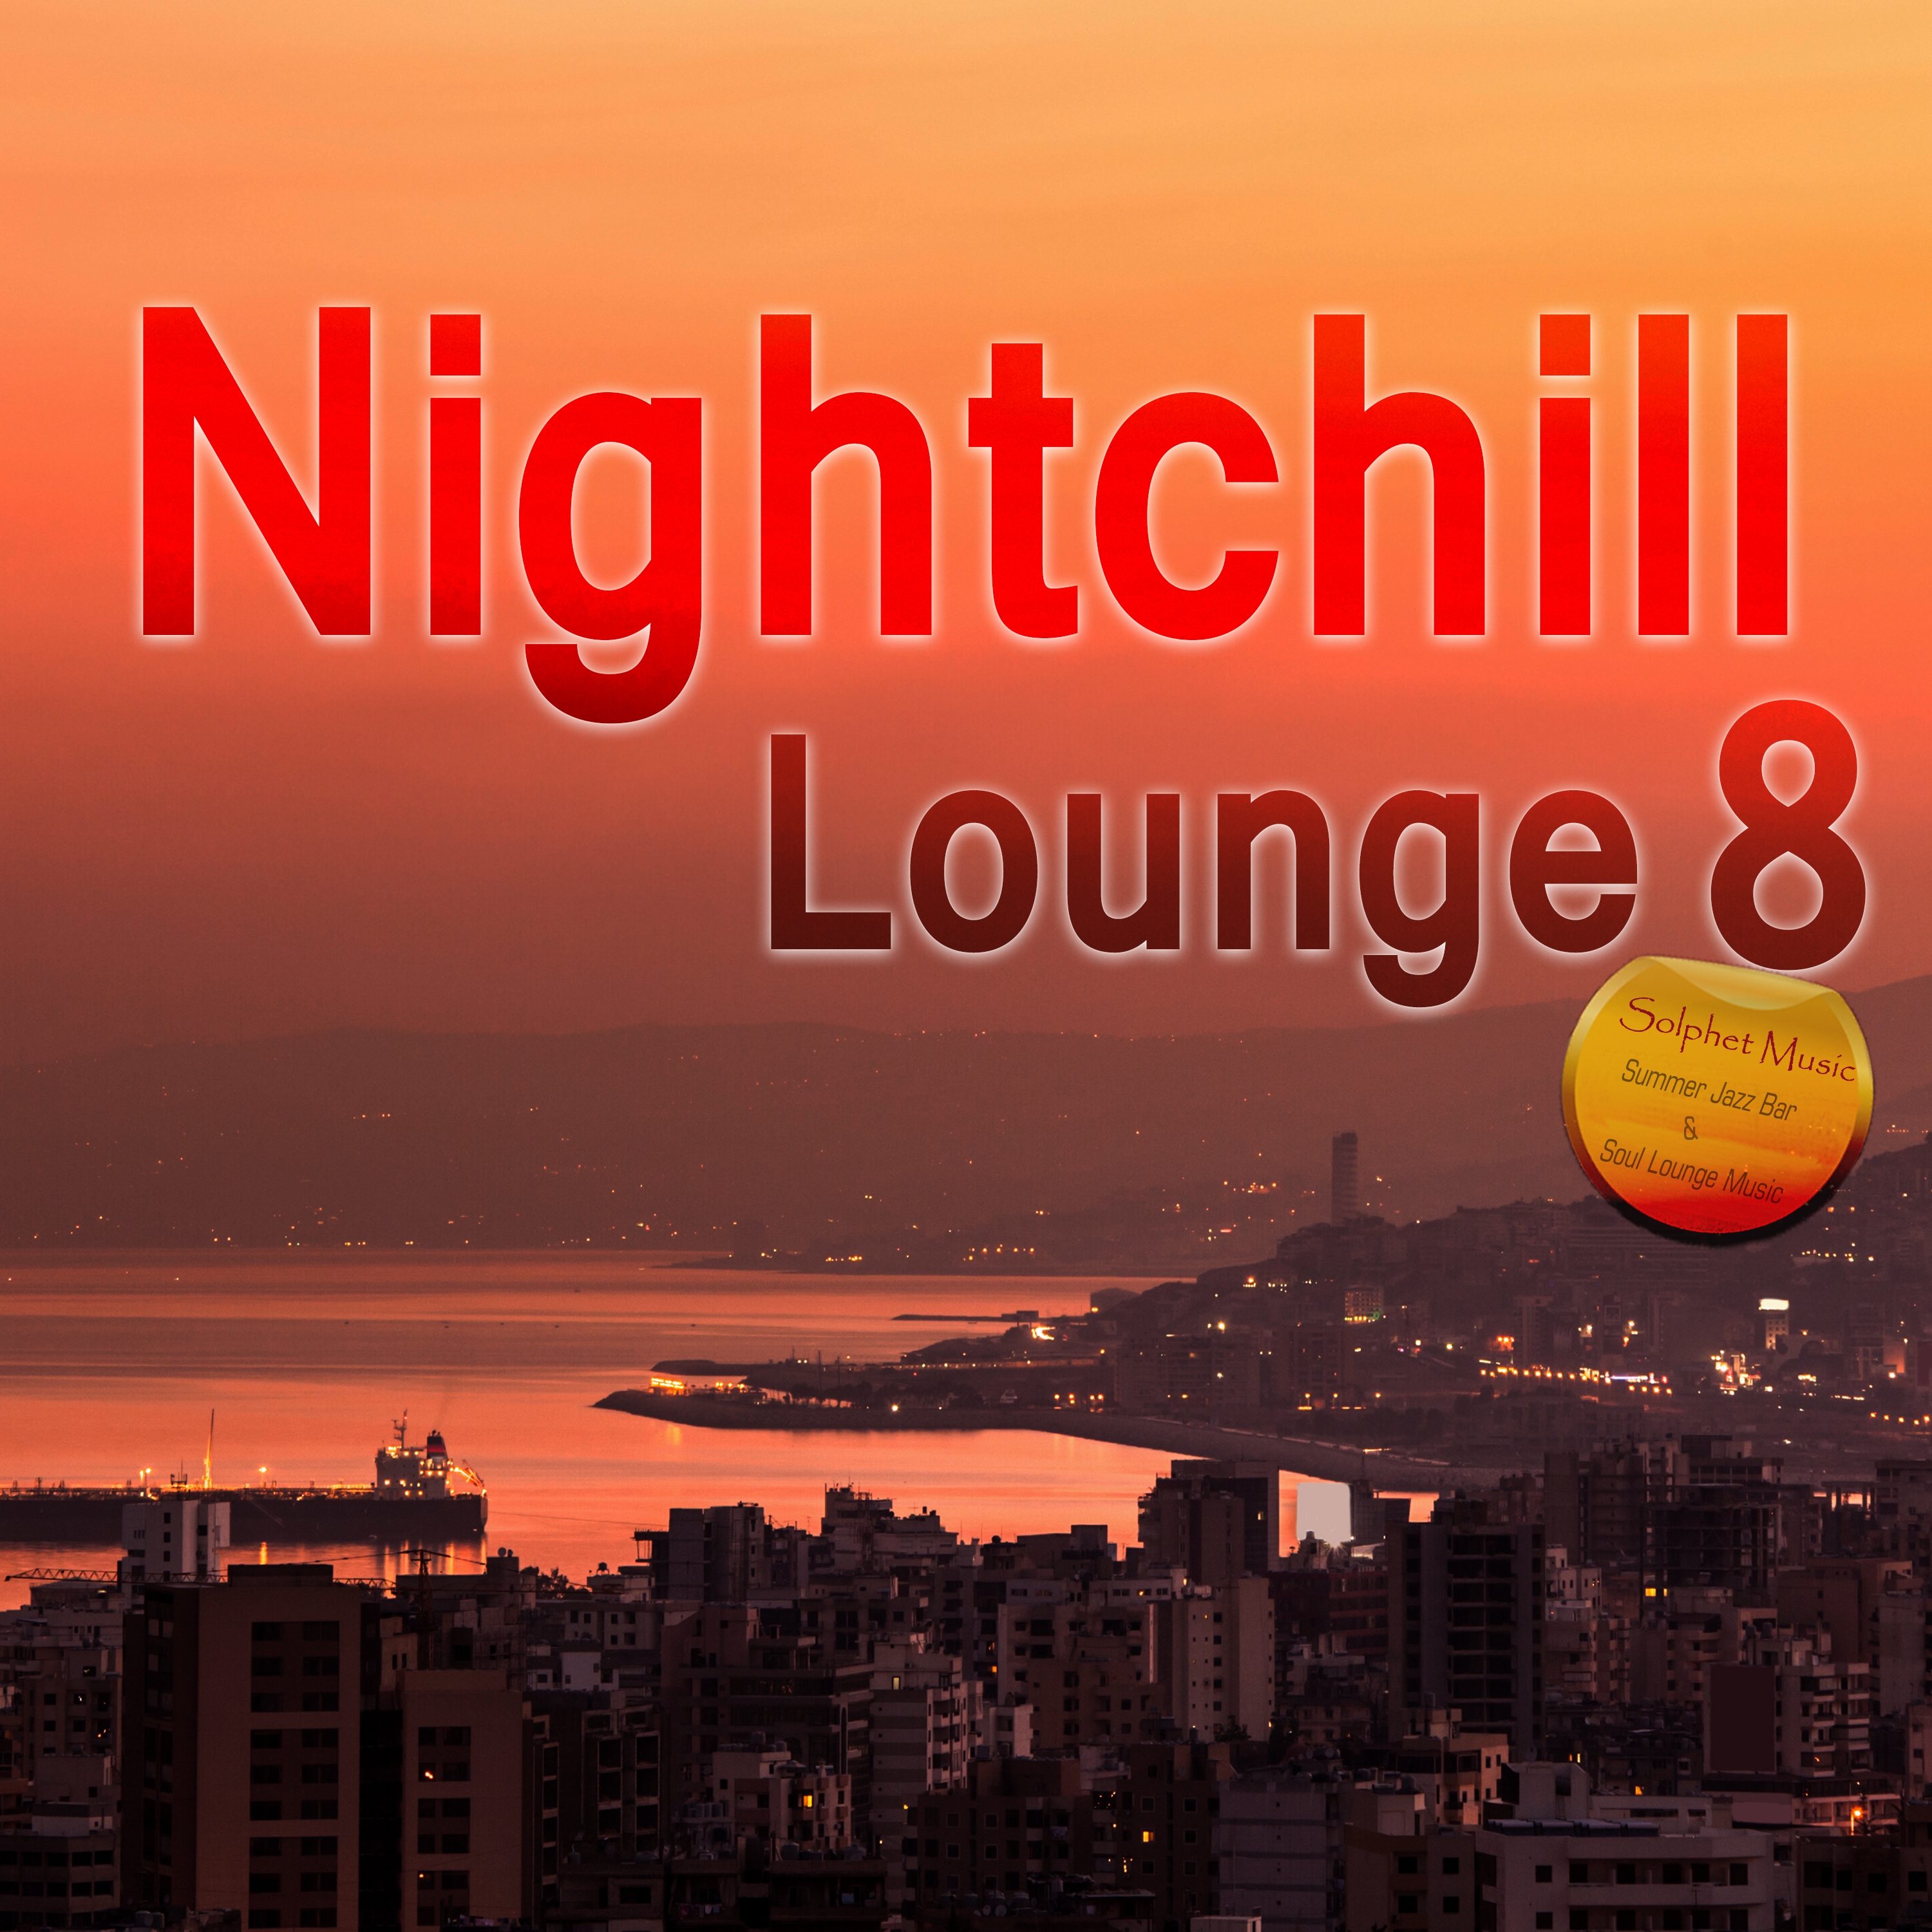 Nightchill Lounge 8 - Summer Jazz Bar & Soul Lounge Music